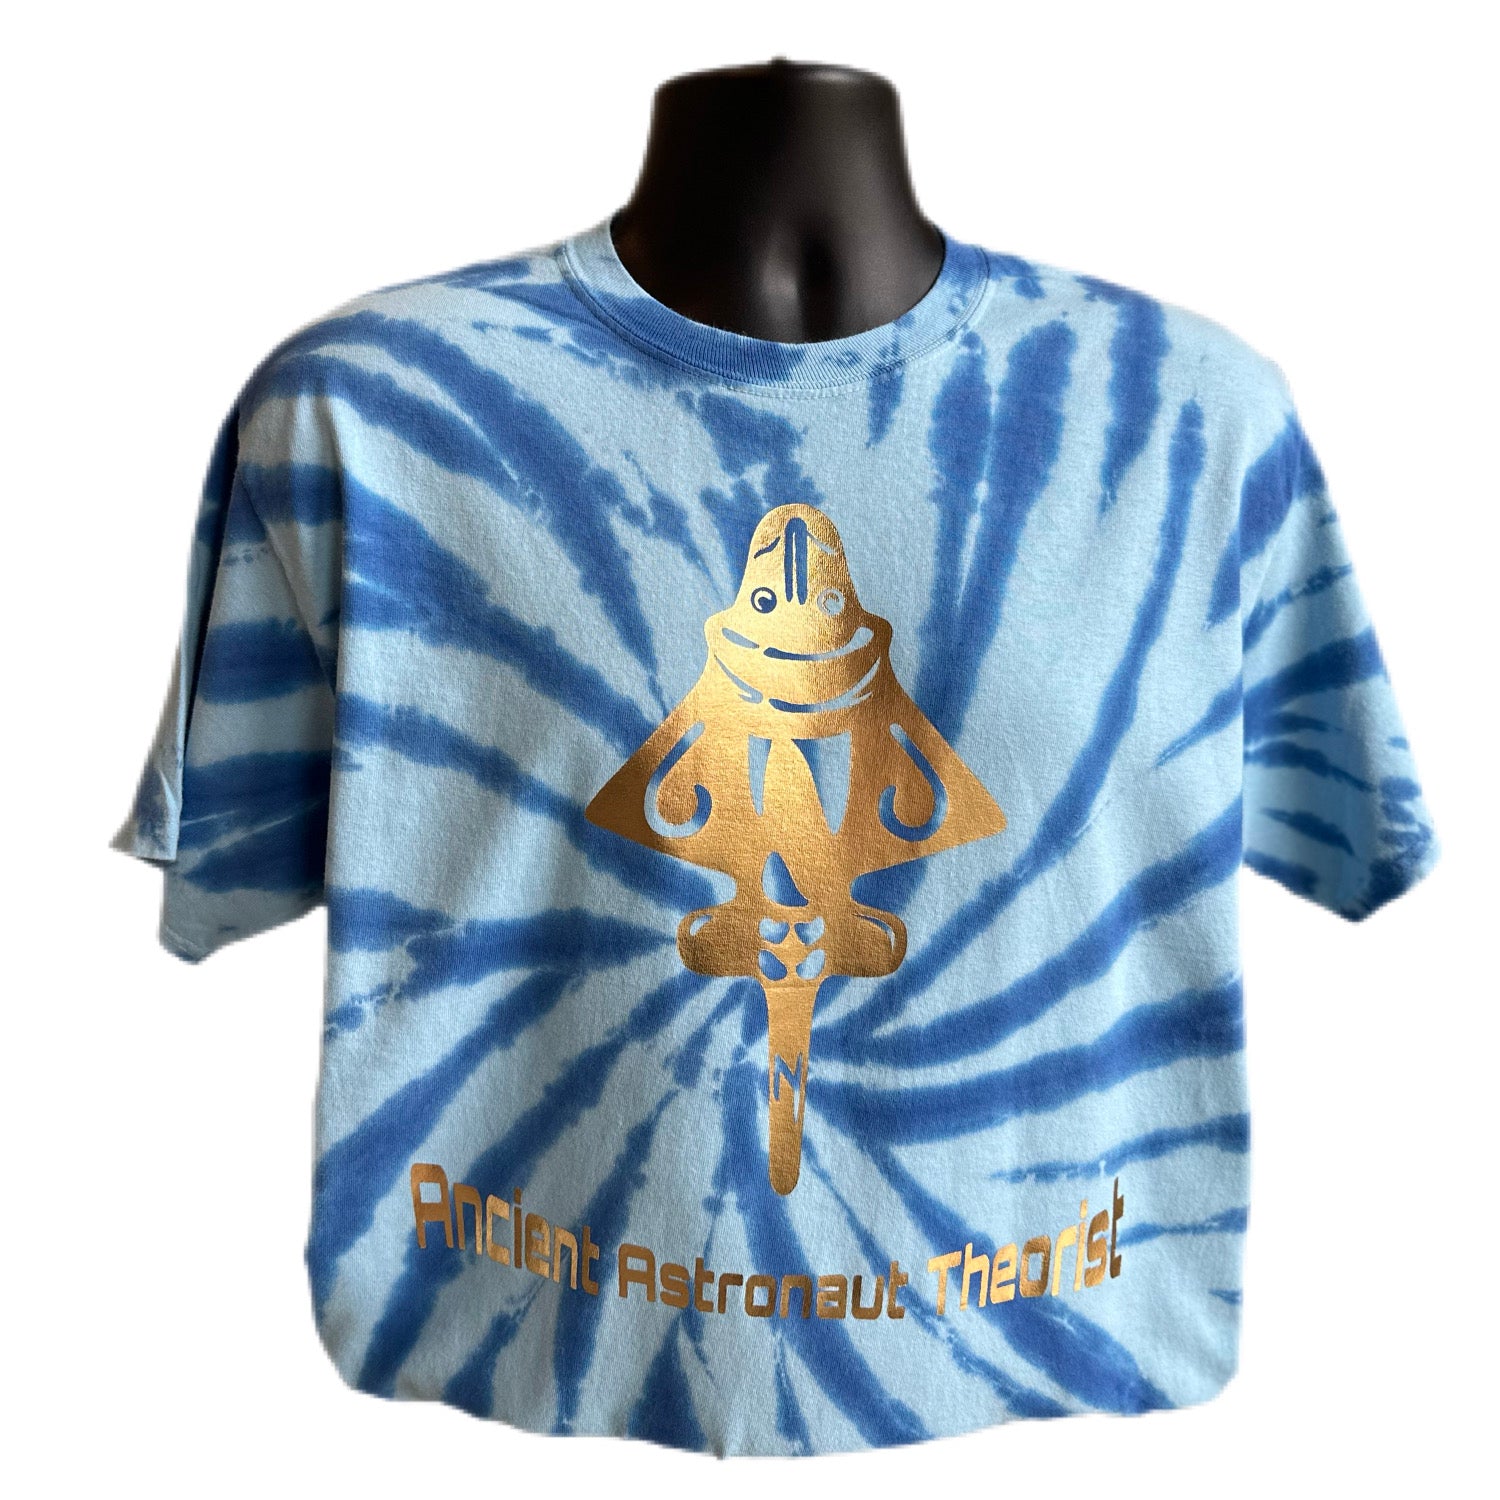 Ancient Astronaut Theorist Blue Tie Dye T-Shirt